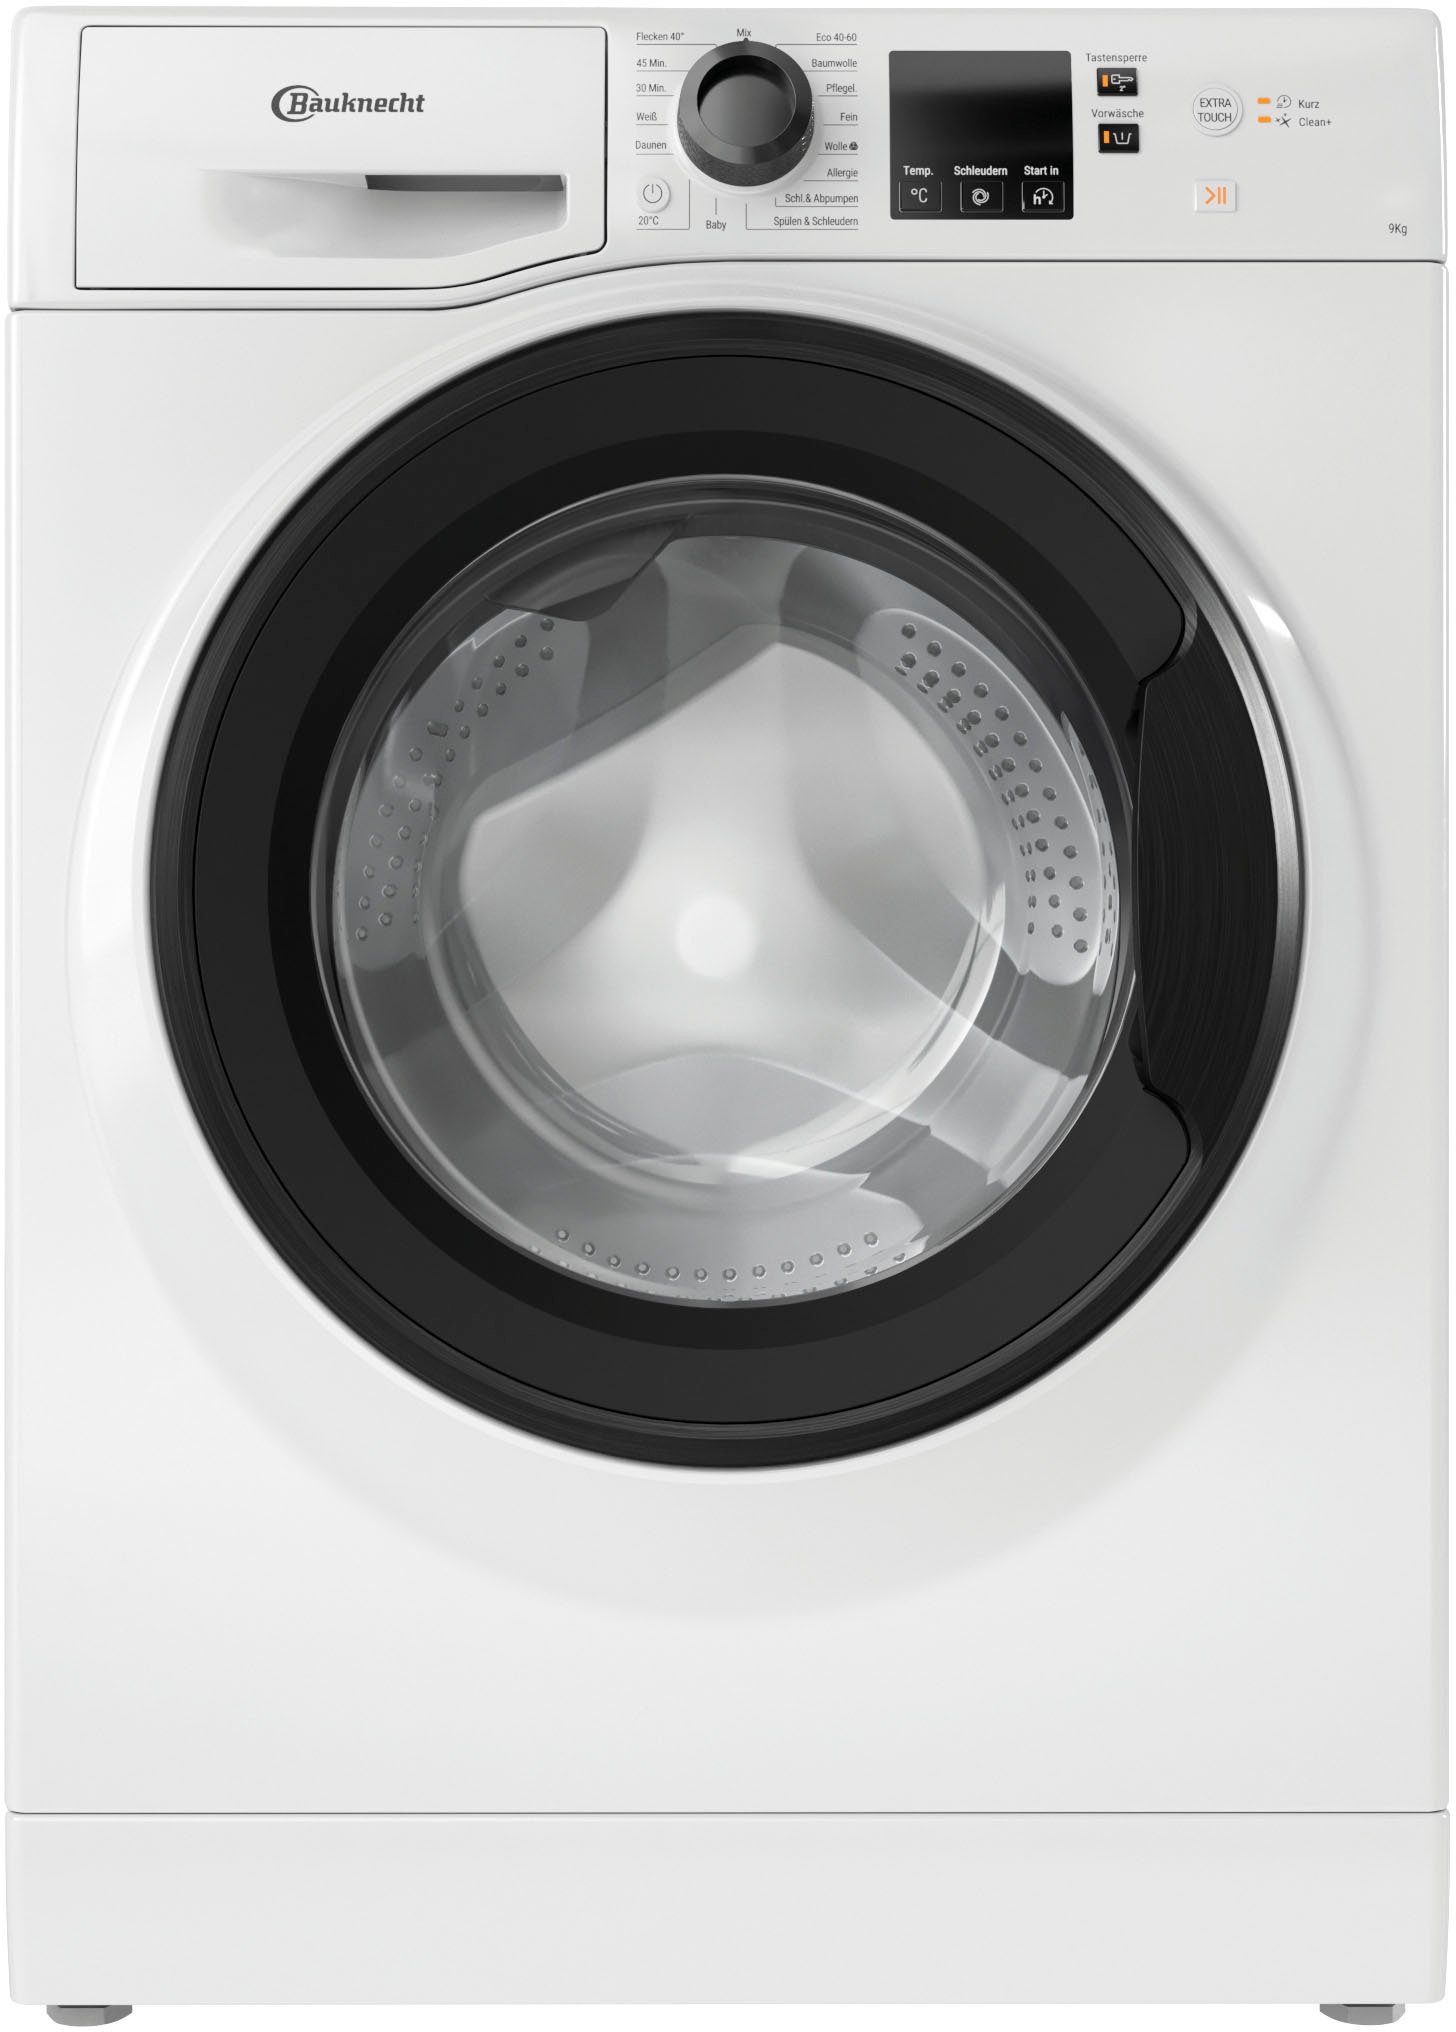 BAUKNECHT Waschmaschine BPW 914 B, 1400 kg, 9 U/min